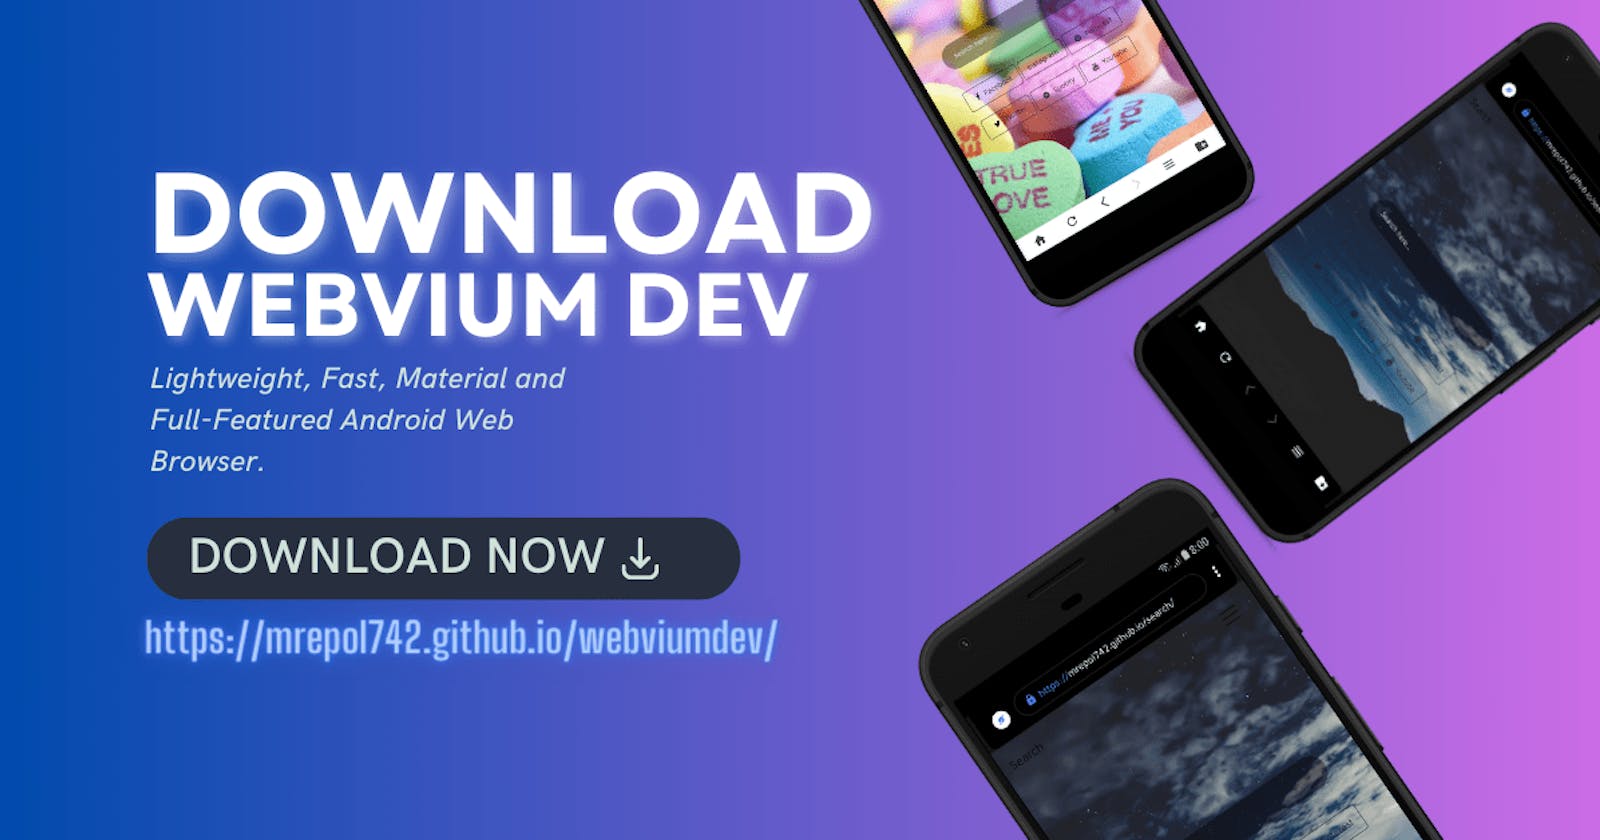 What is Webvium Dev?